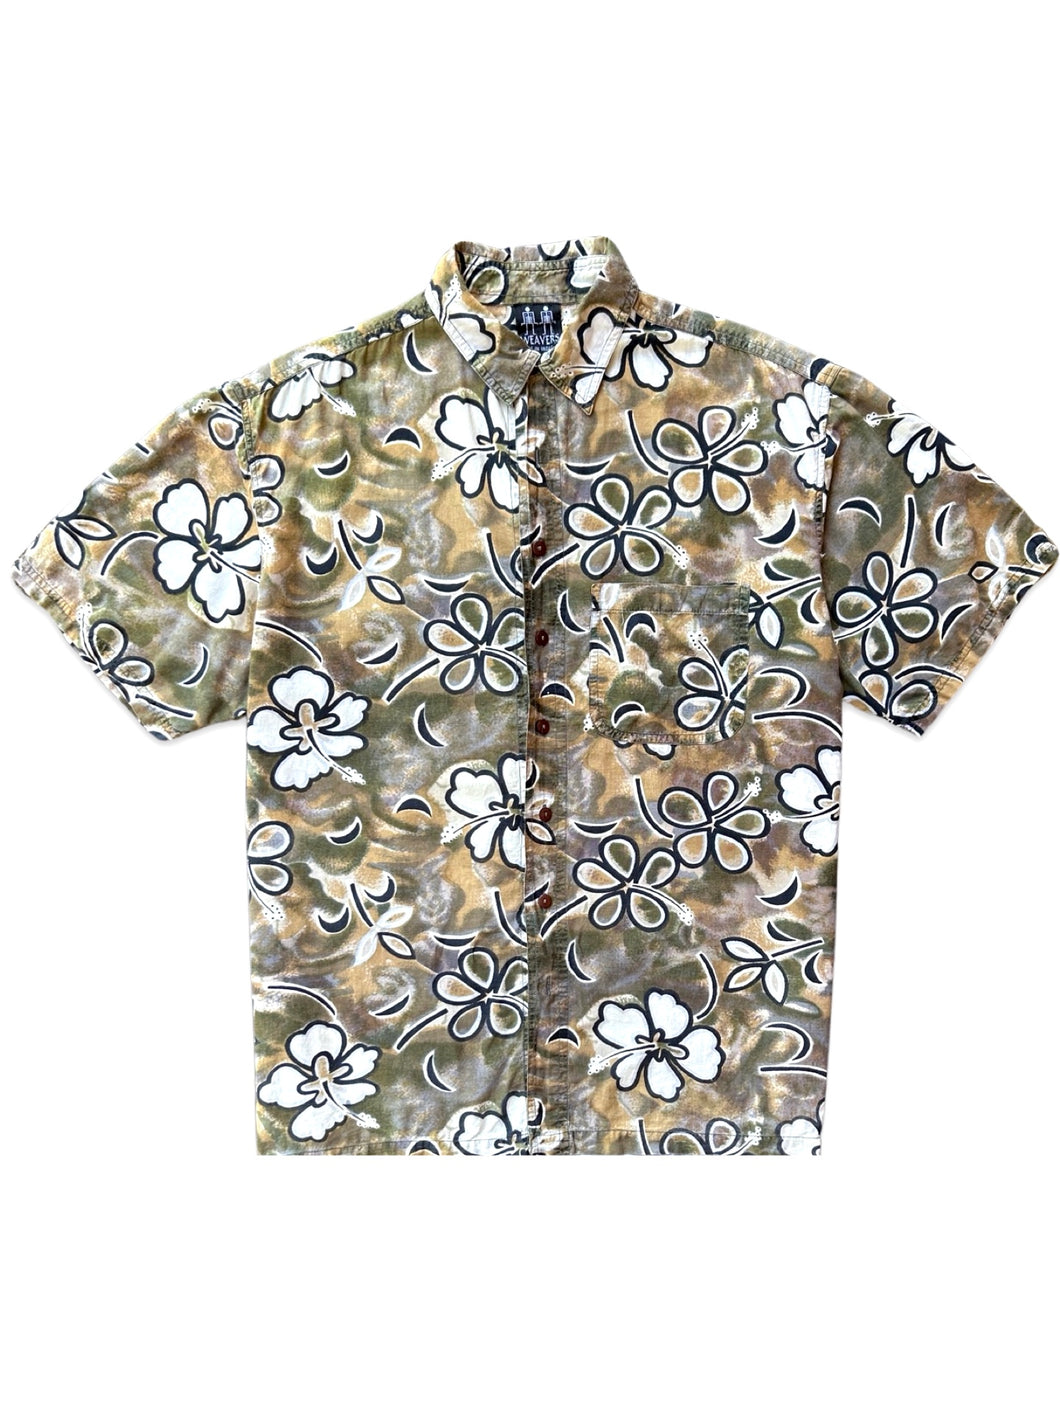 Weavers Vintage Short Sleeve Party Shirt ⏐ Size L